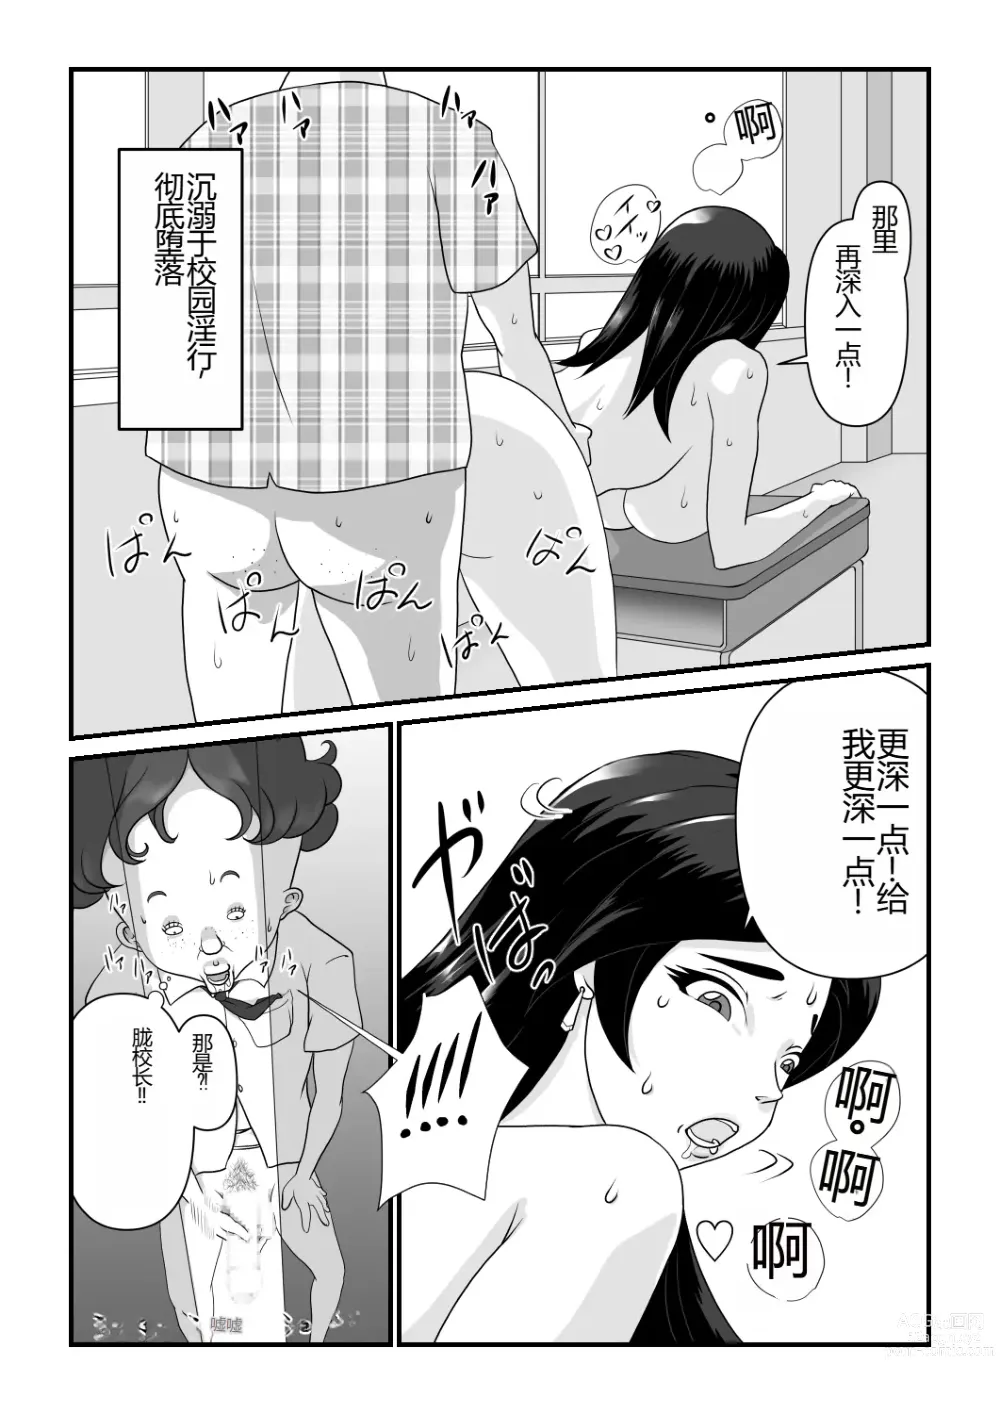 Page 4 of doujinshi Strange School